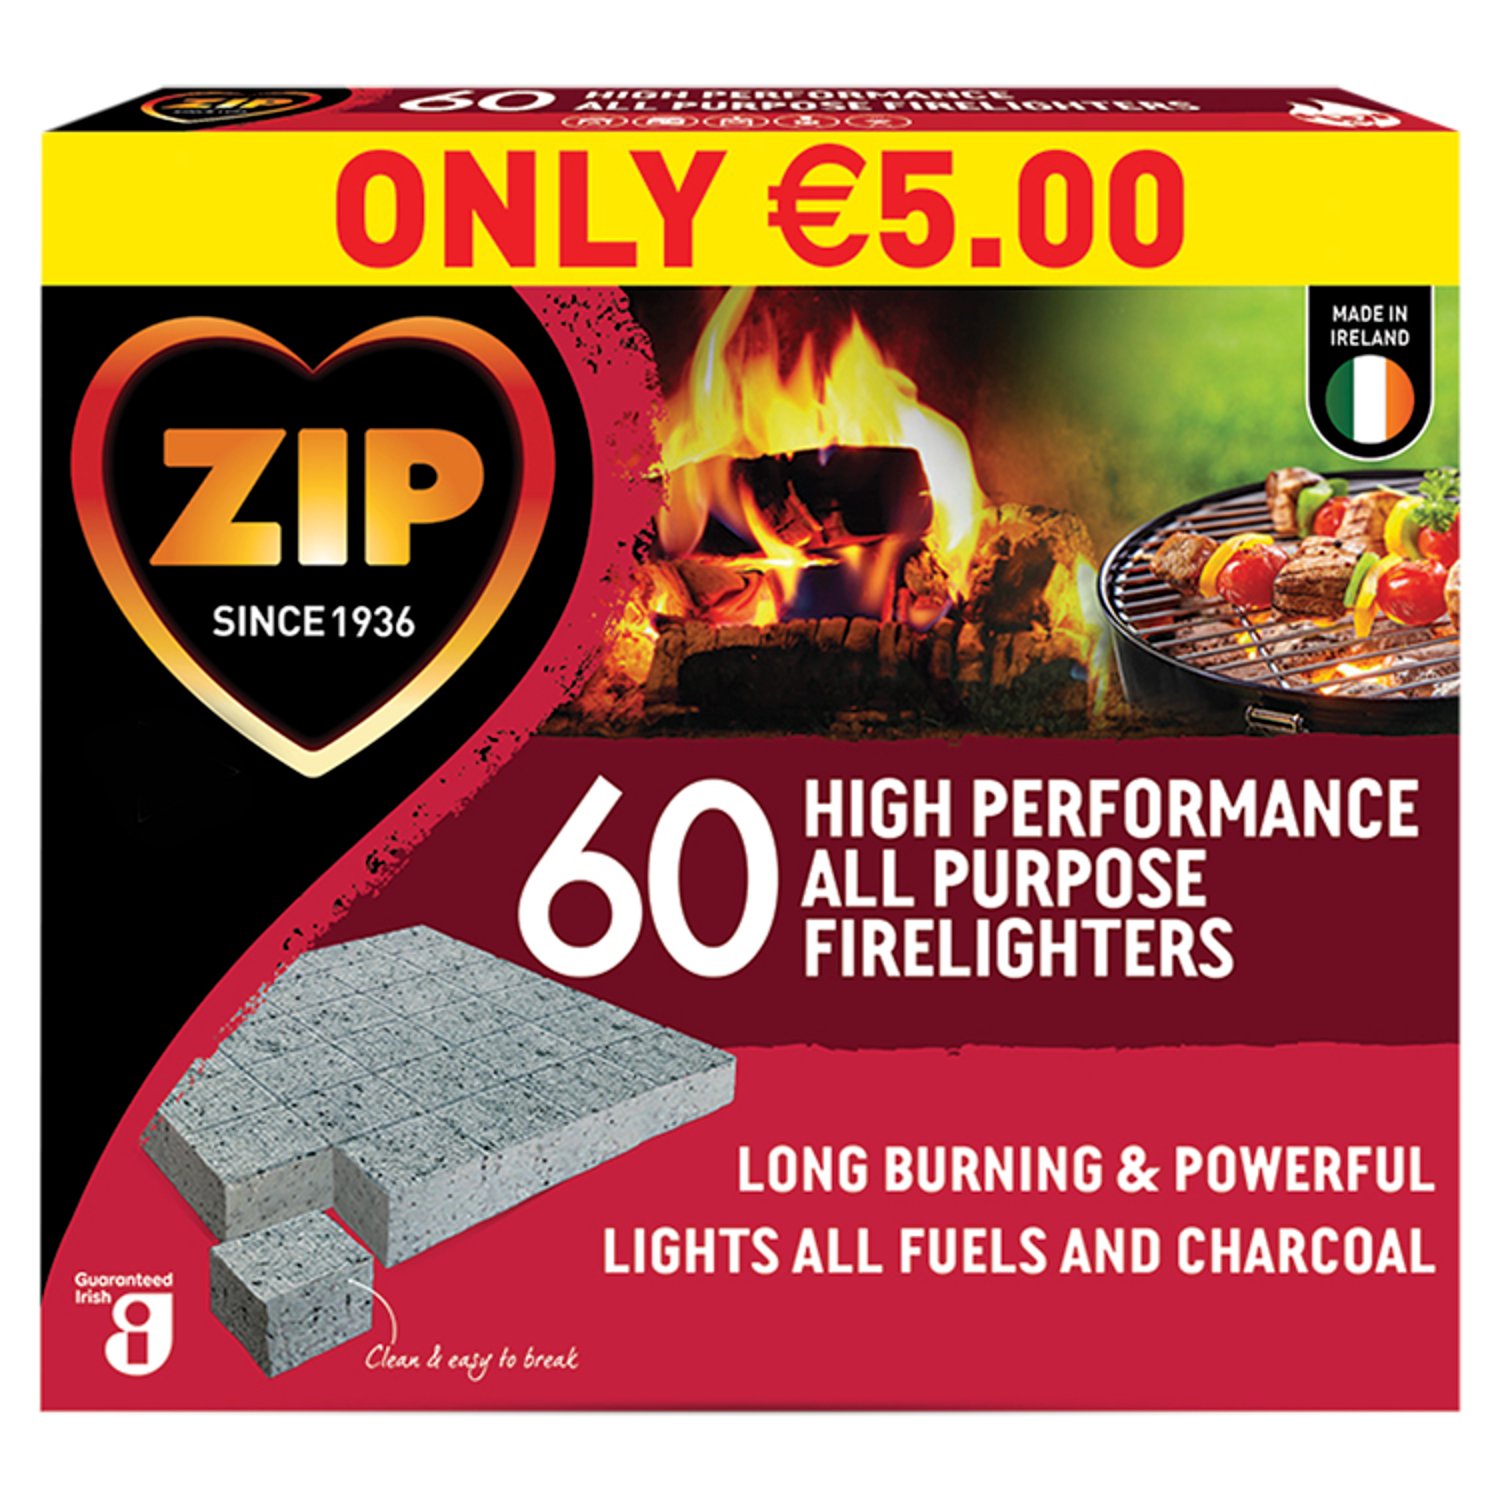 Zip High Performance Firelighters 60 Pack €5 (60 Pack)